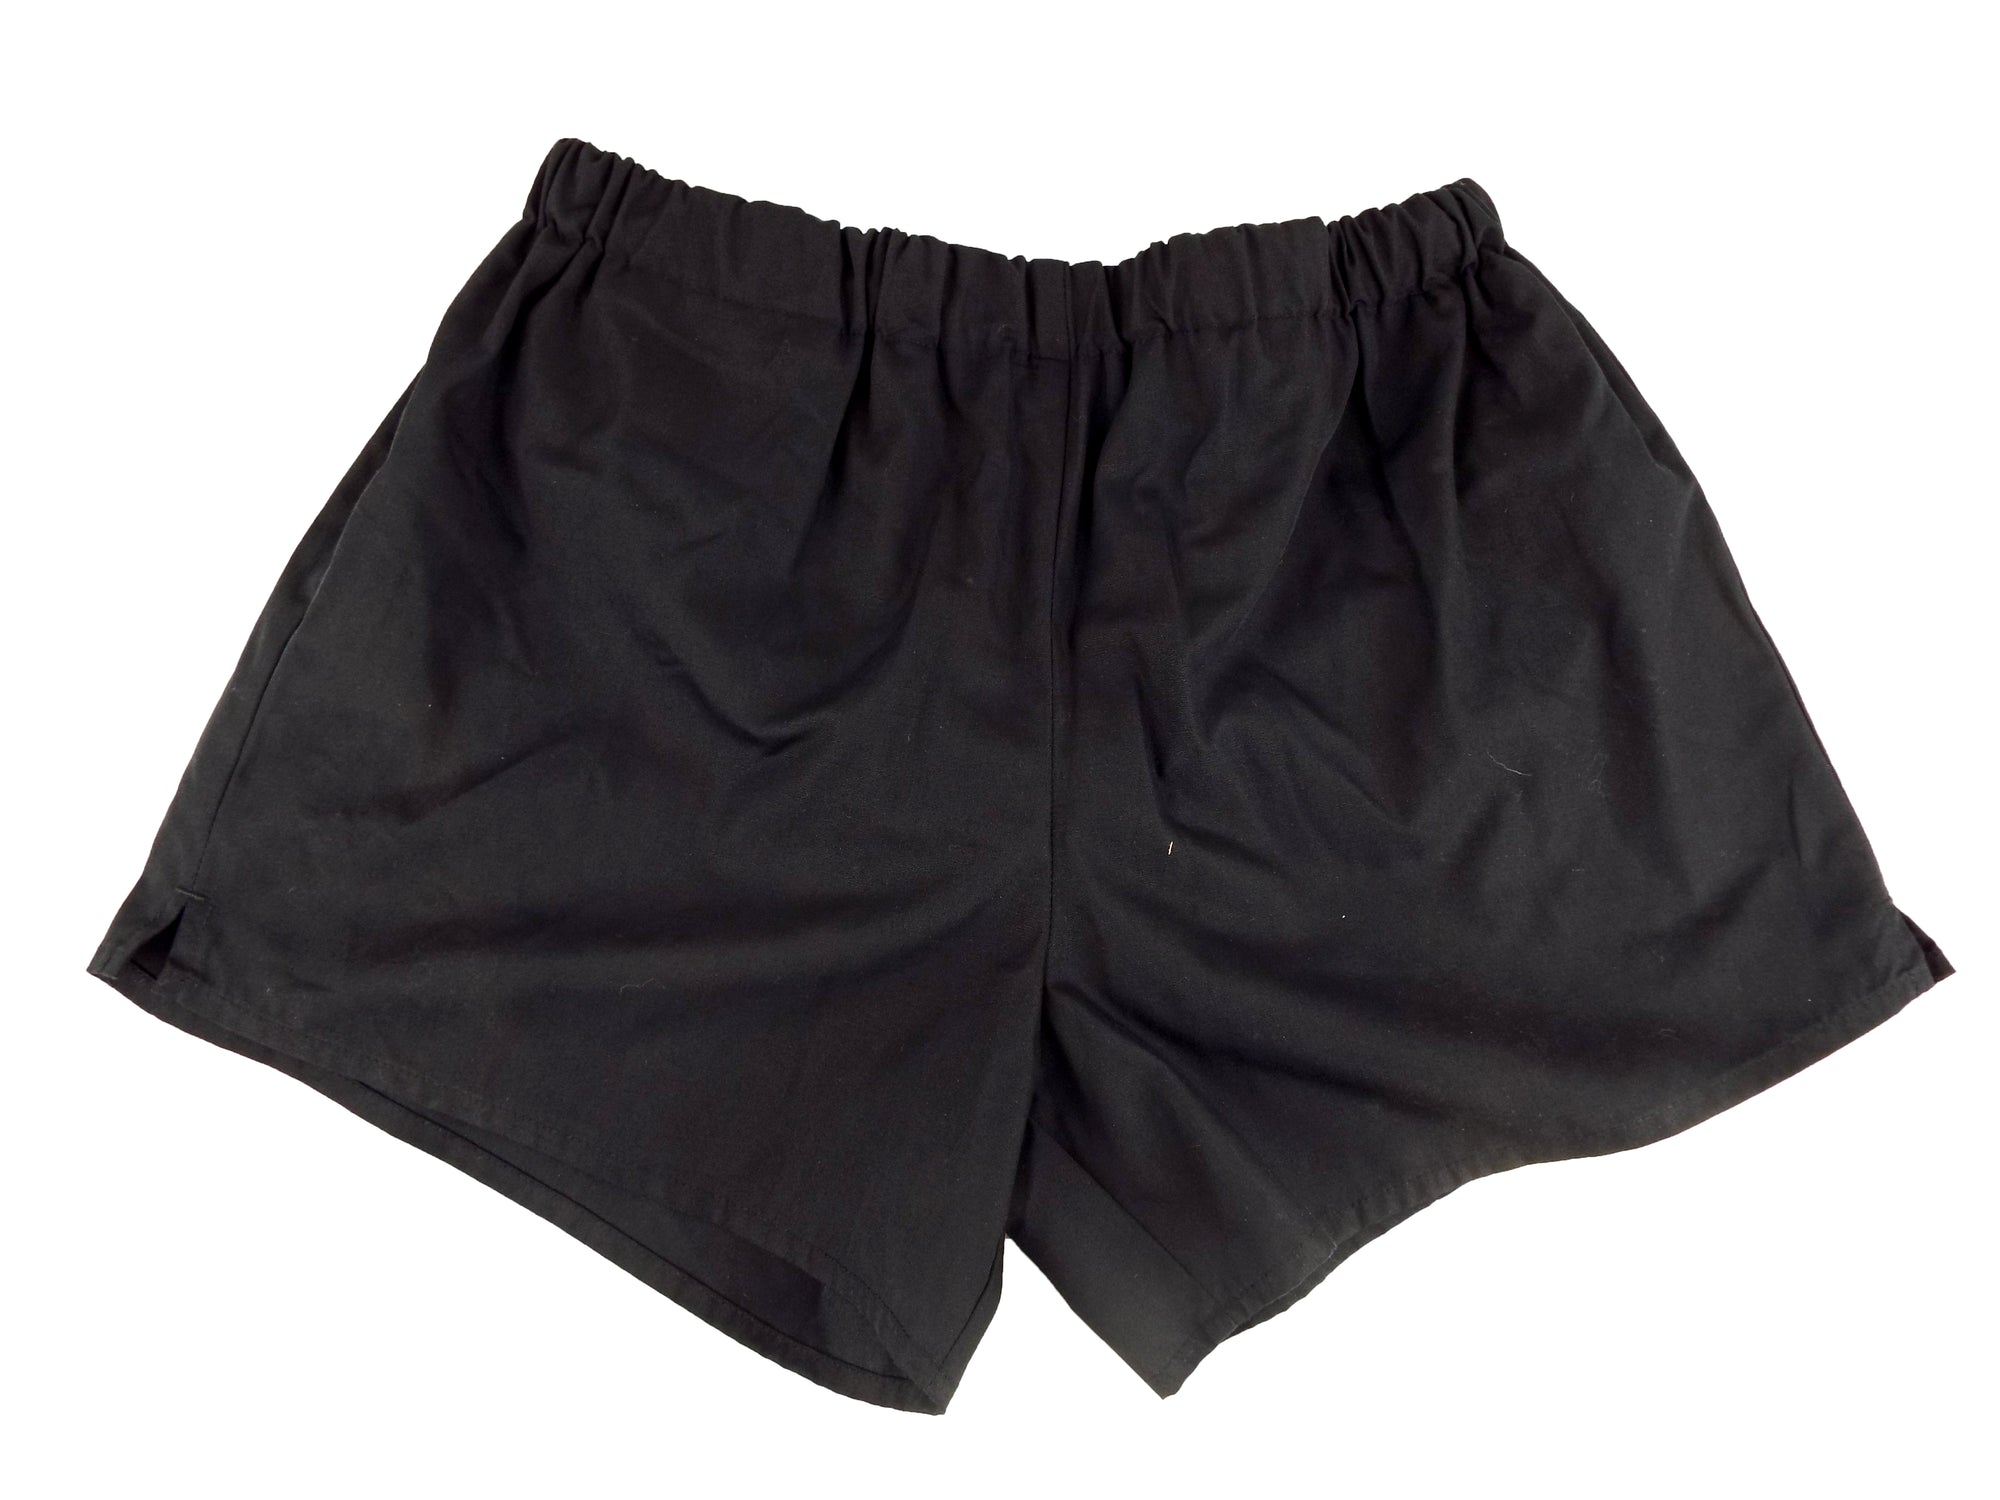 British Army - PTI - Black Sports Shorts - Men's - Grade 1